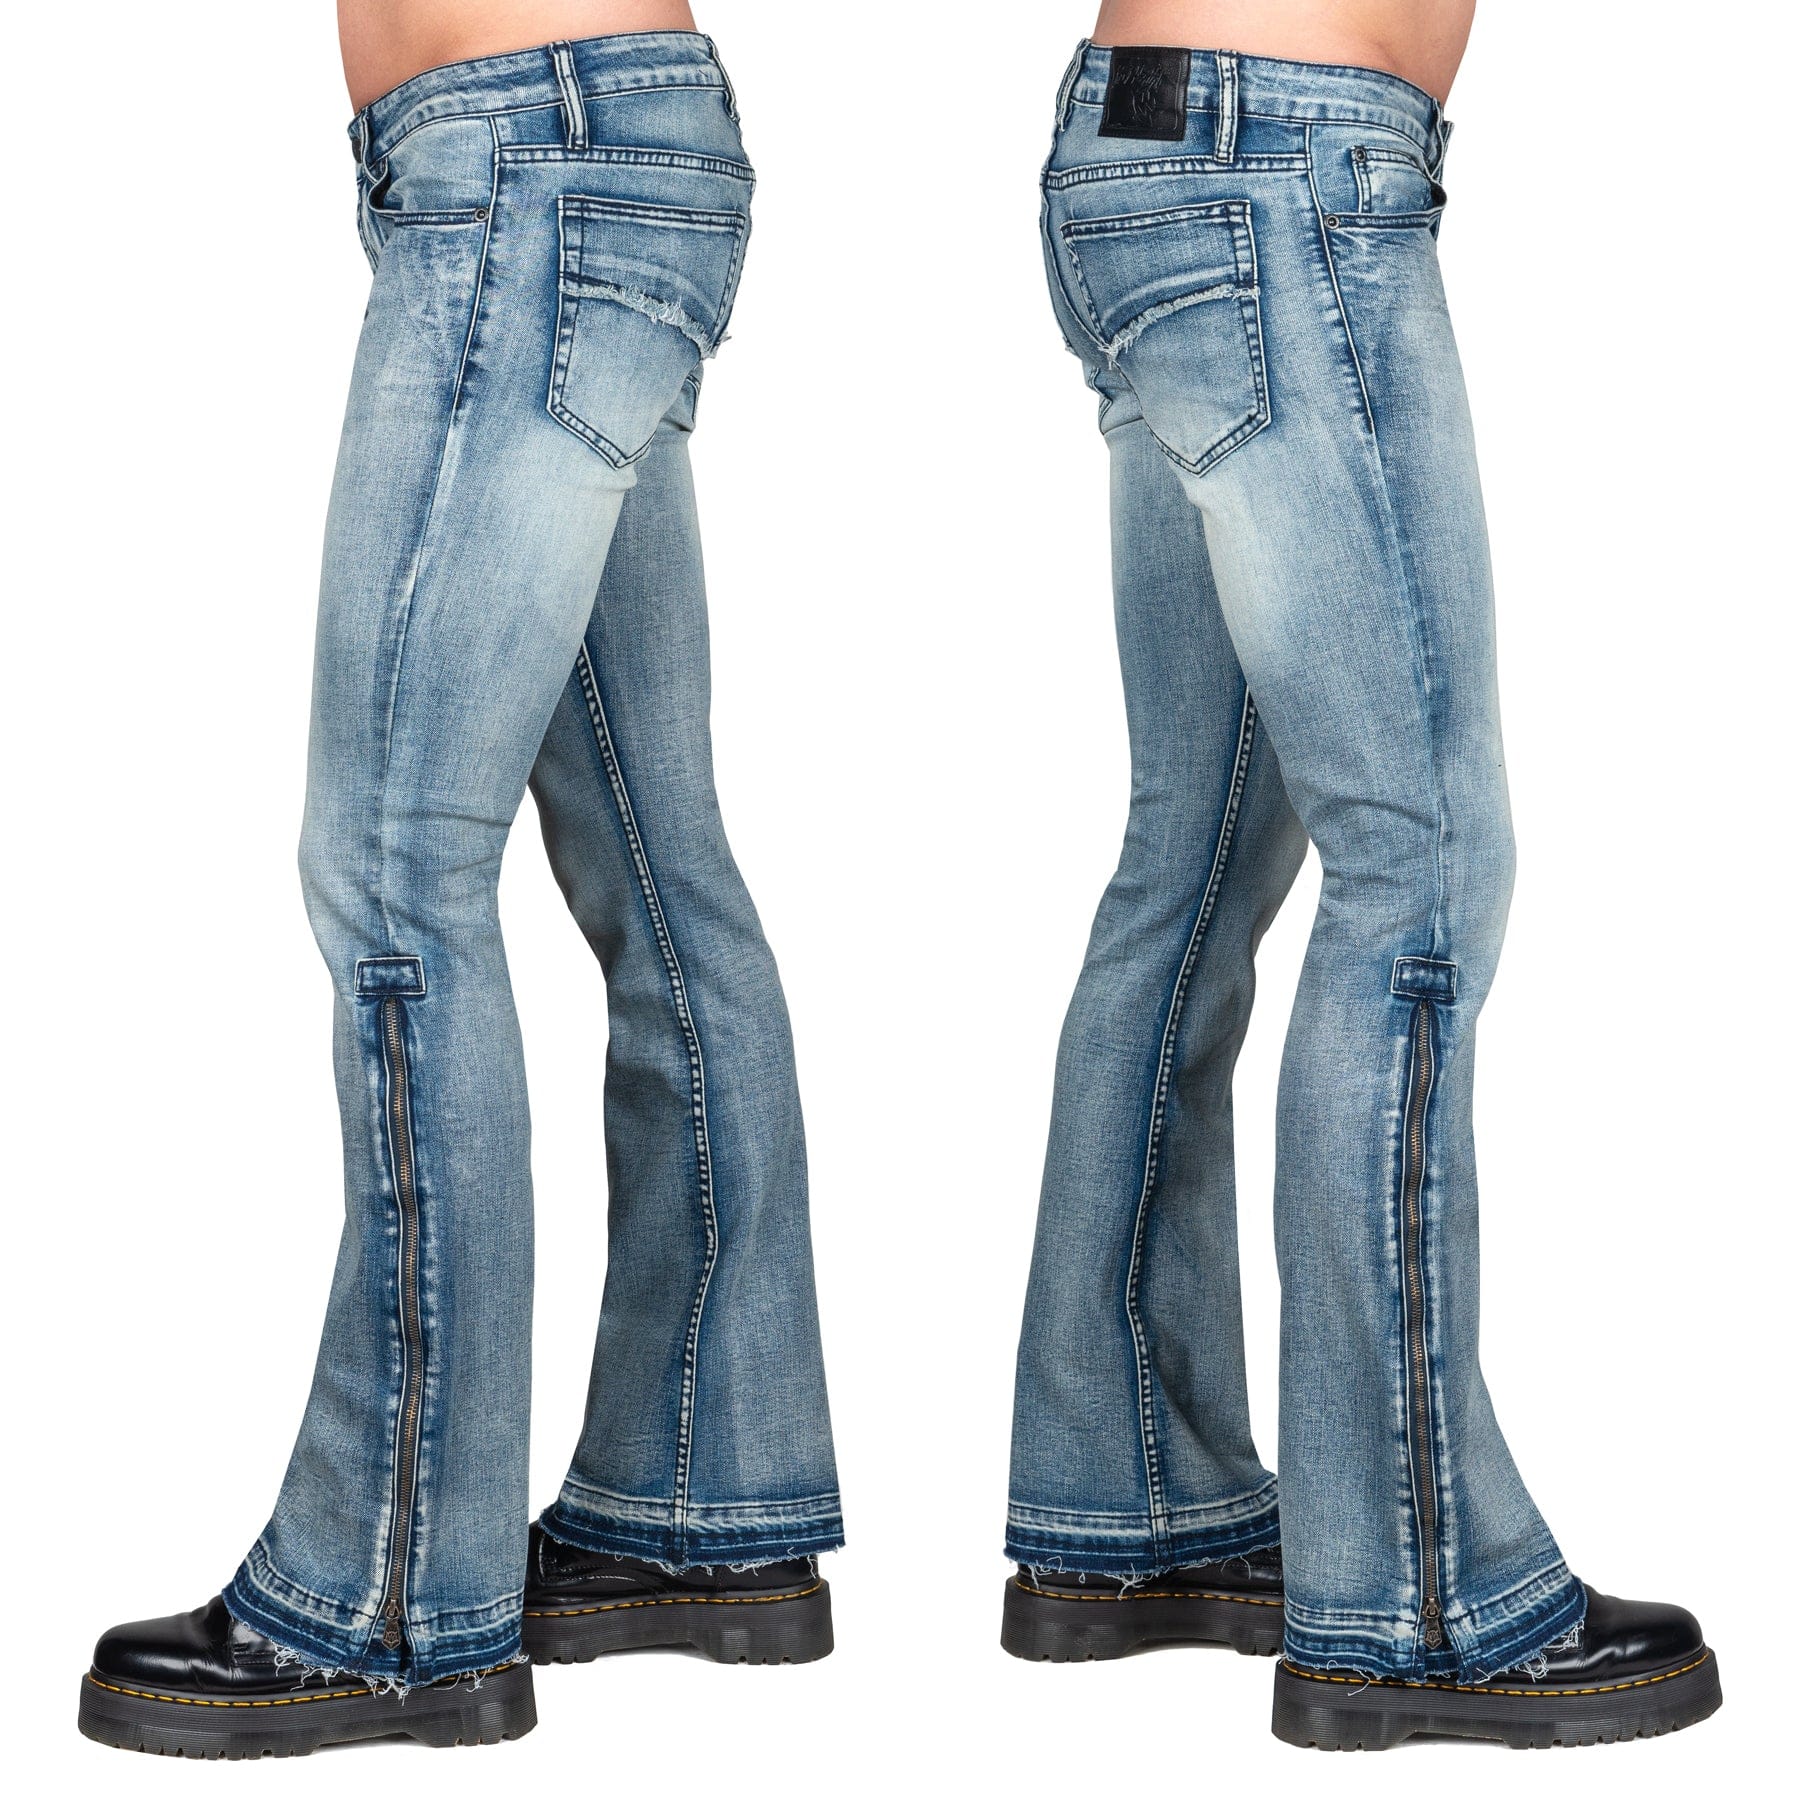 Wornstar Clothing Pants Hellraiser Side Zipper Mens Jeans - Classic Blue